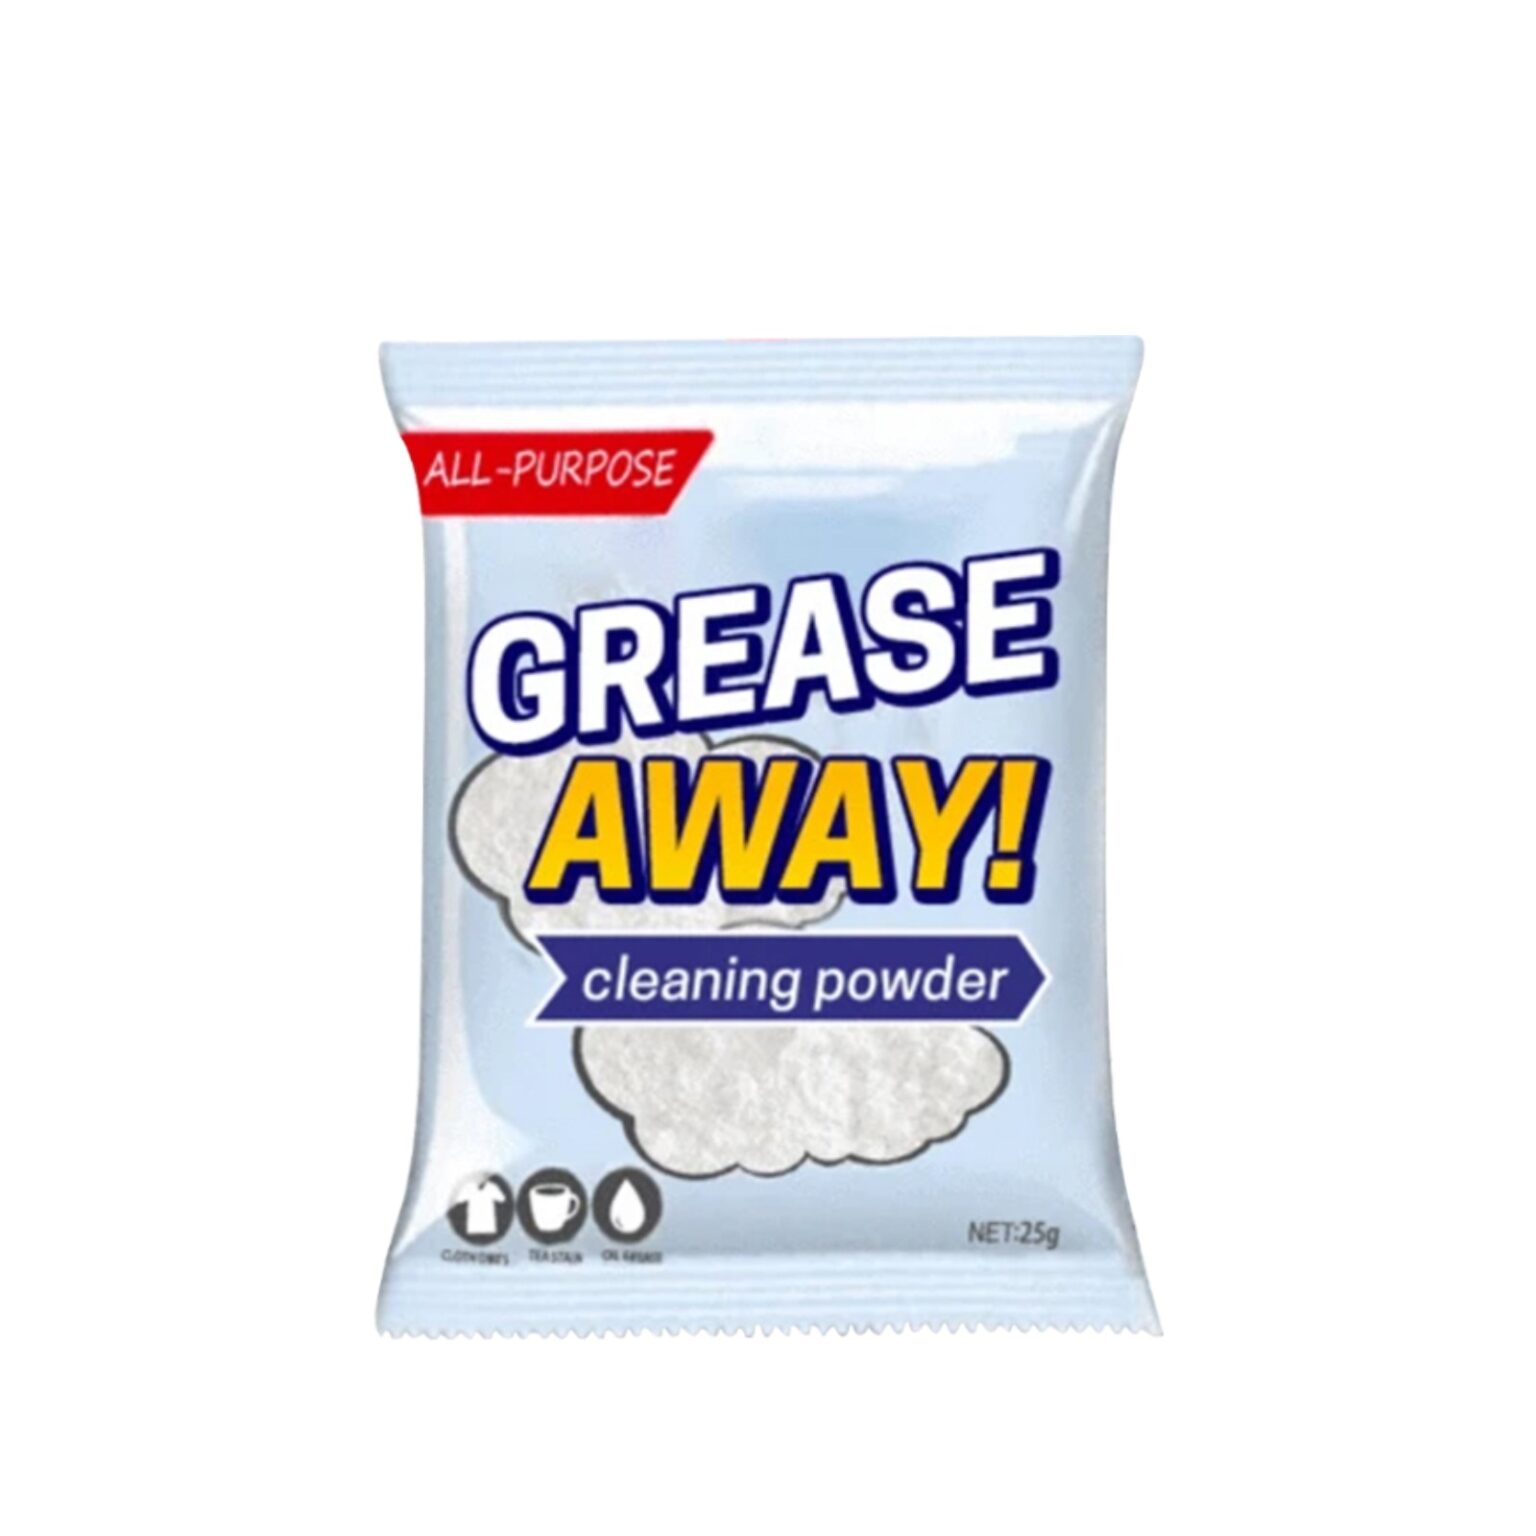 Greaseaway Powder Cleaner All Purpose Cleaning Powder Multi Purpose Remover Clean Up Cleaning Supplies Produit De 5 1536x1536 